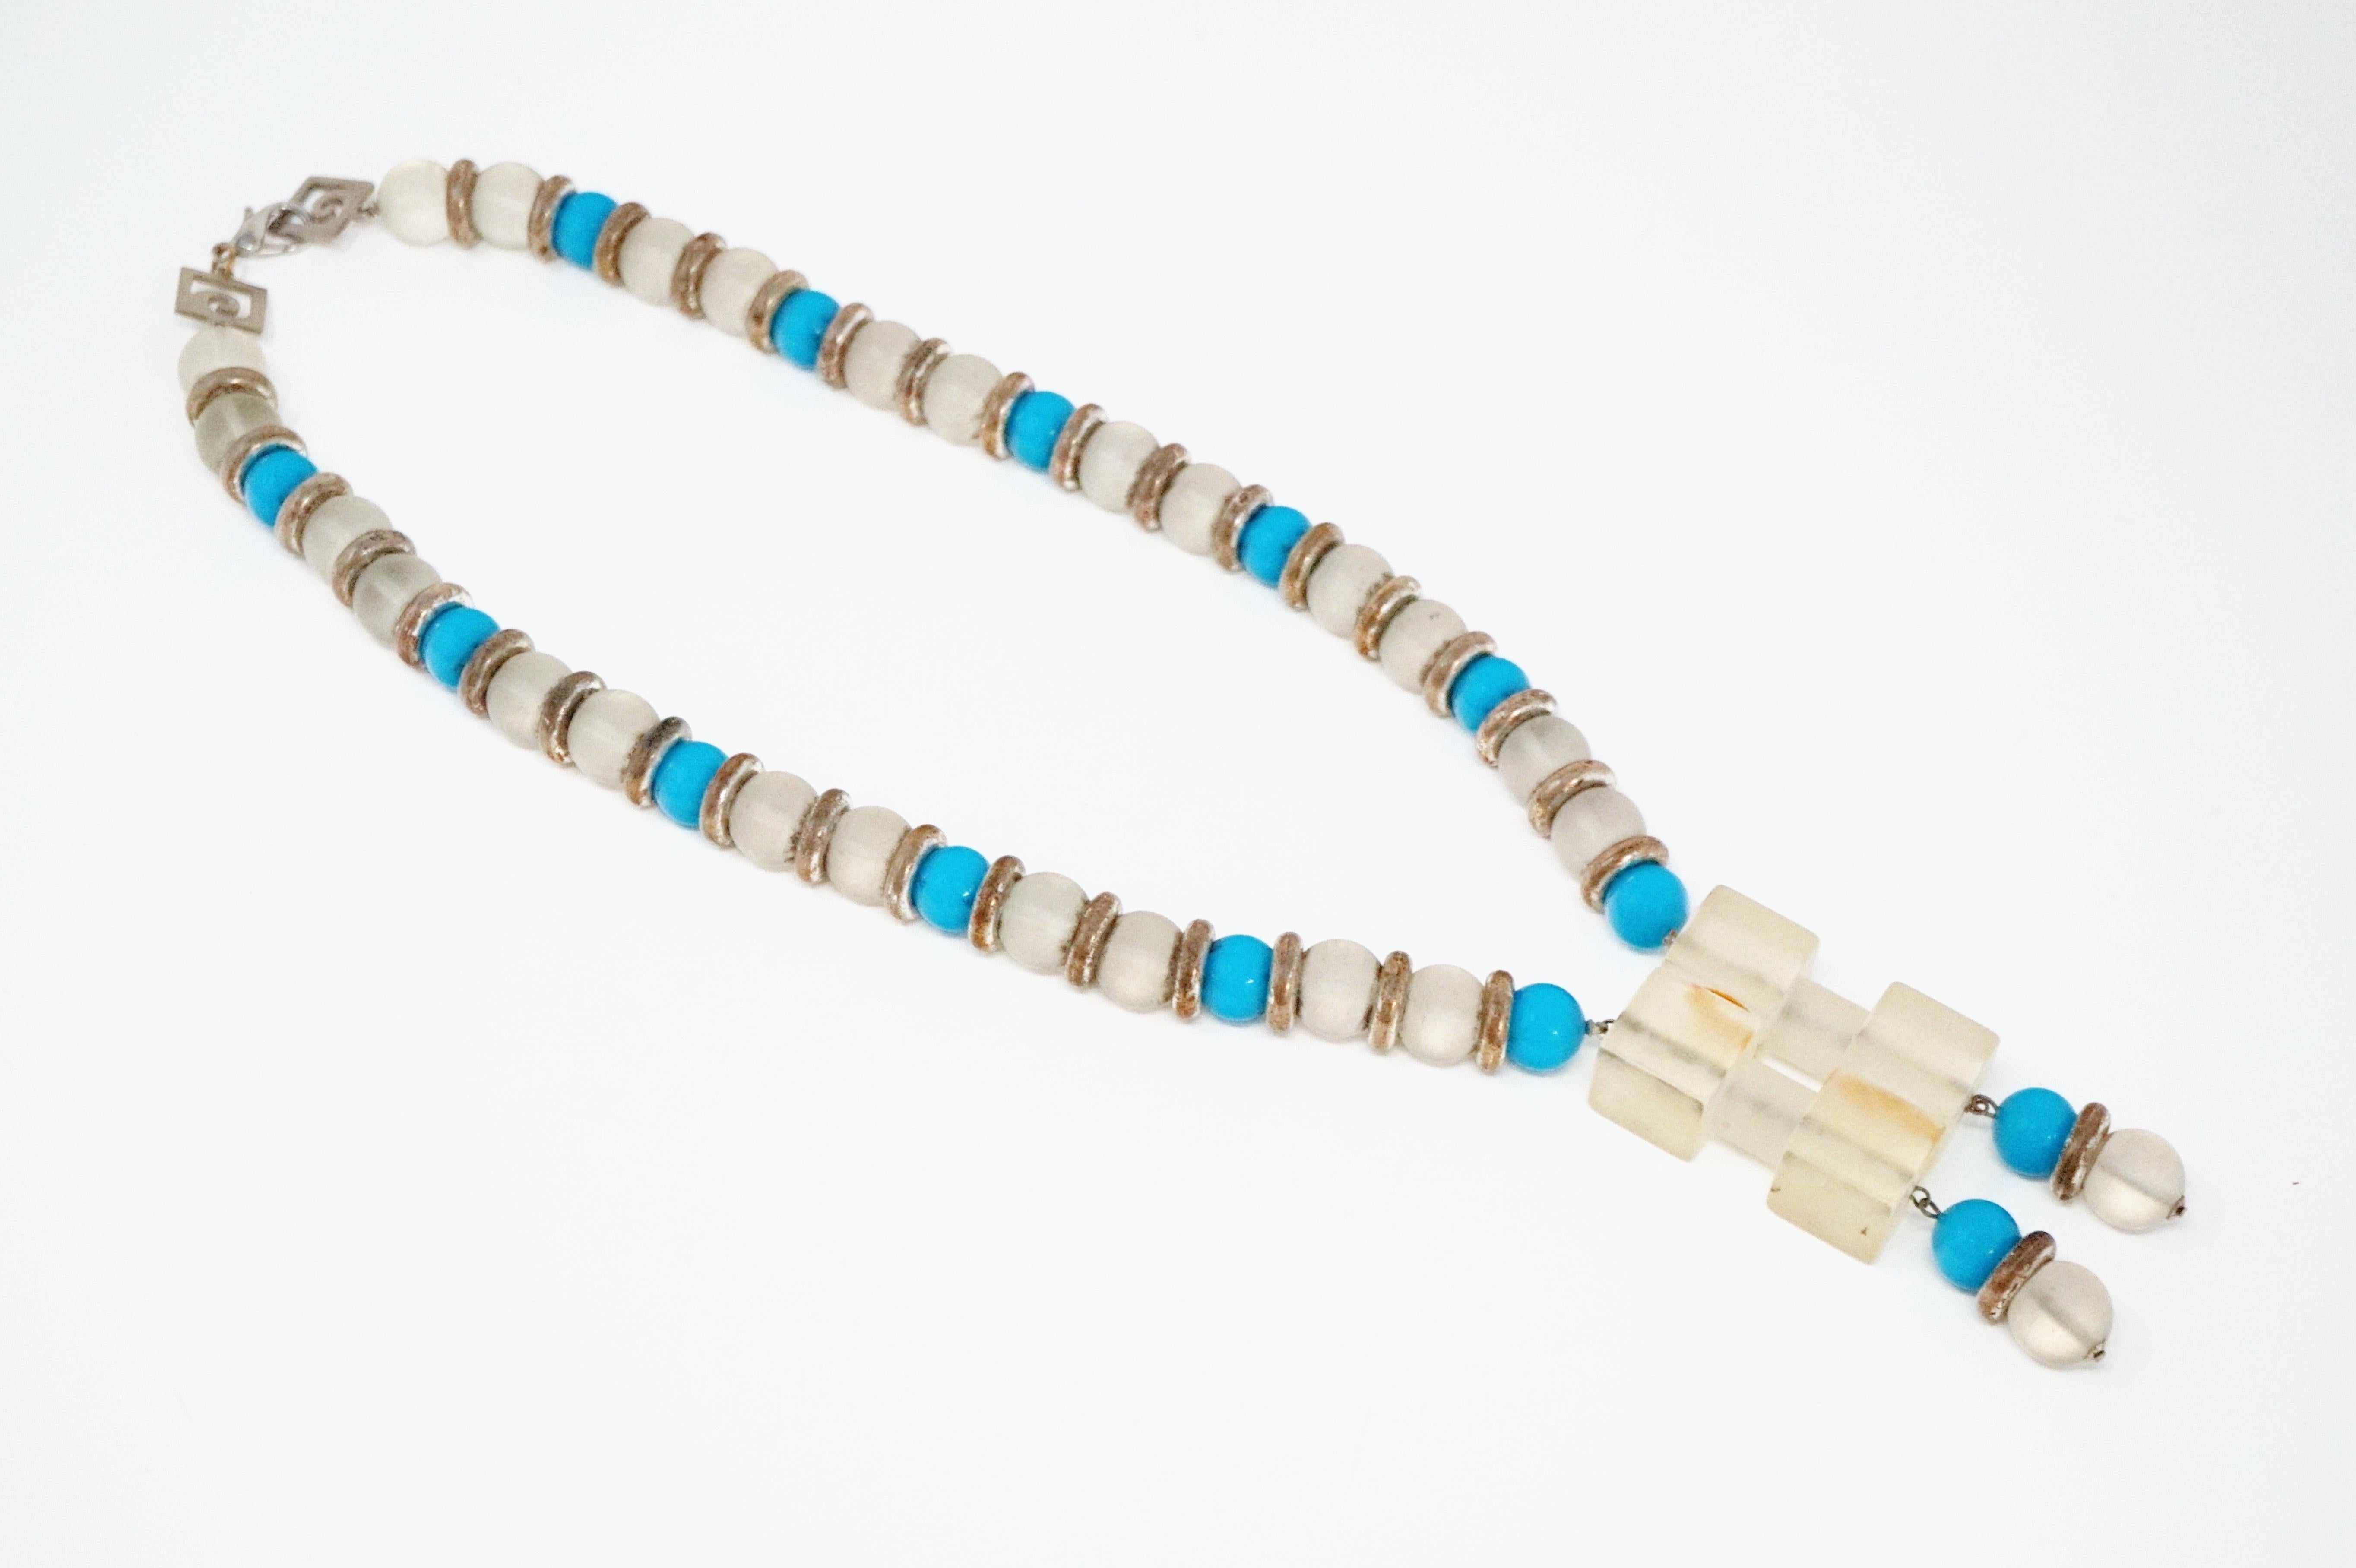 pierre cardin necklace and bracelet set